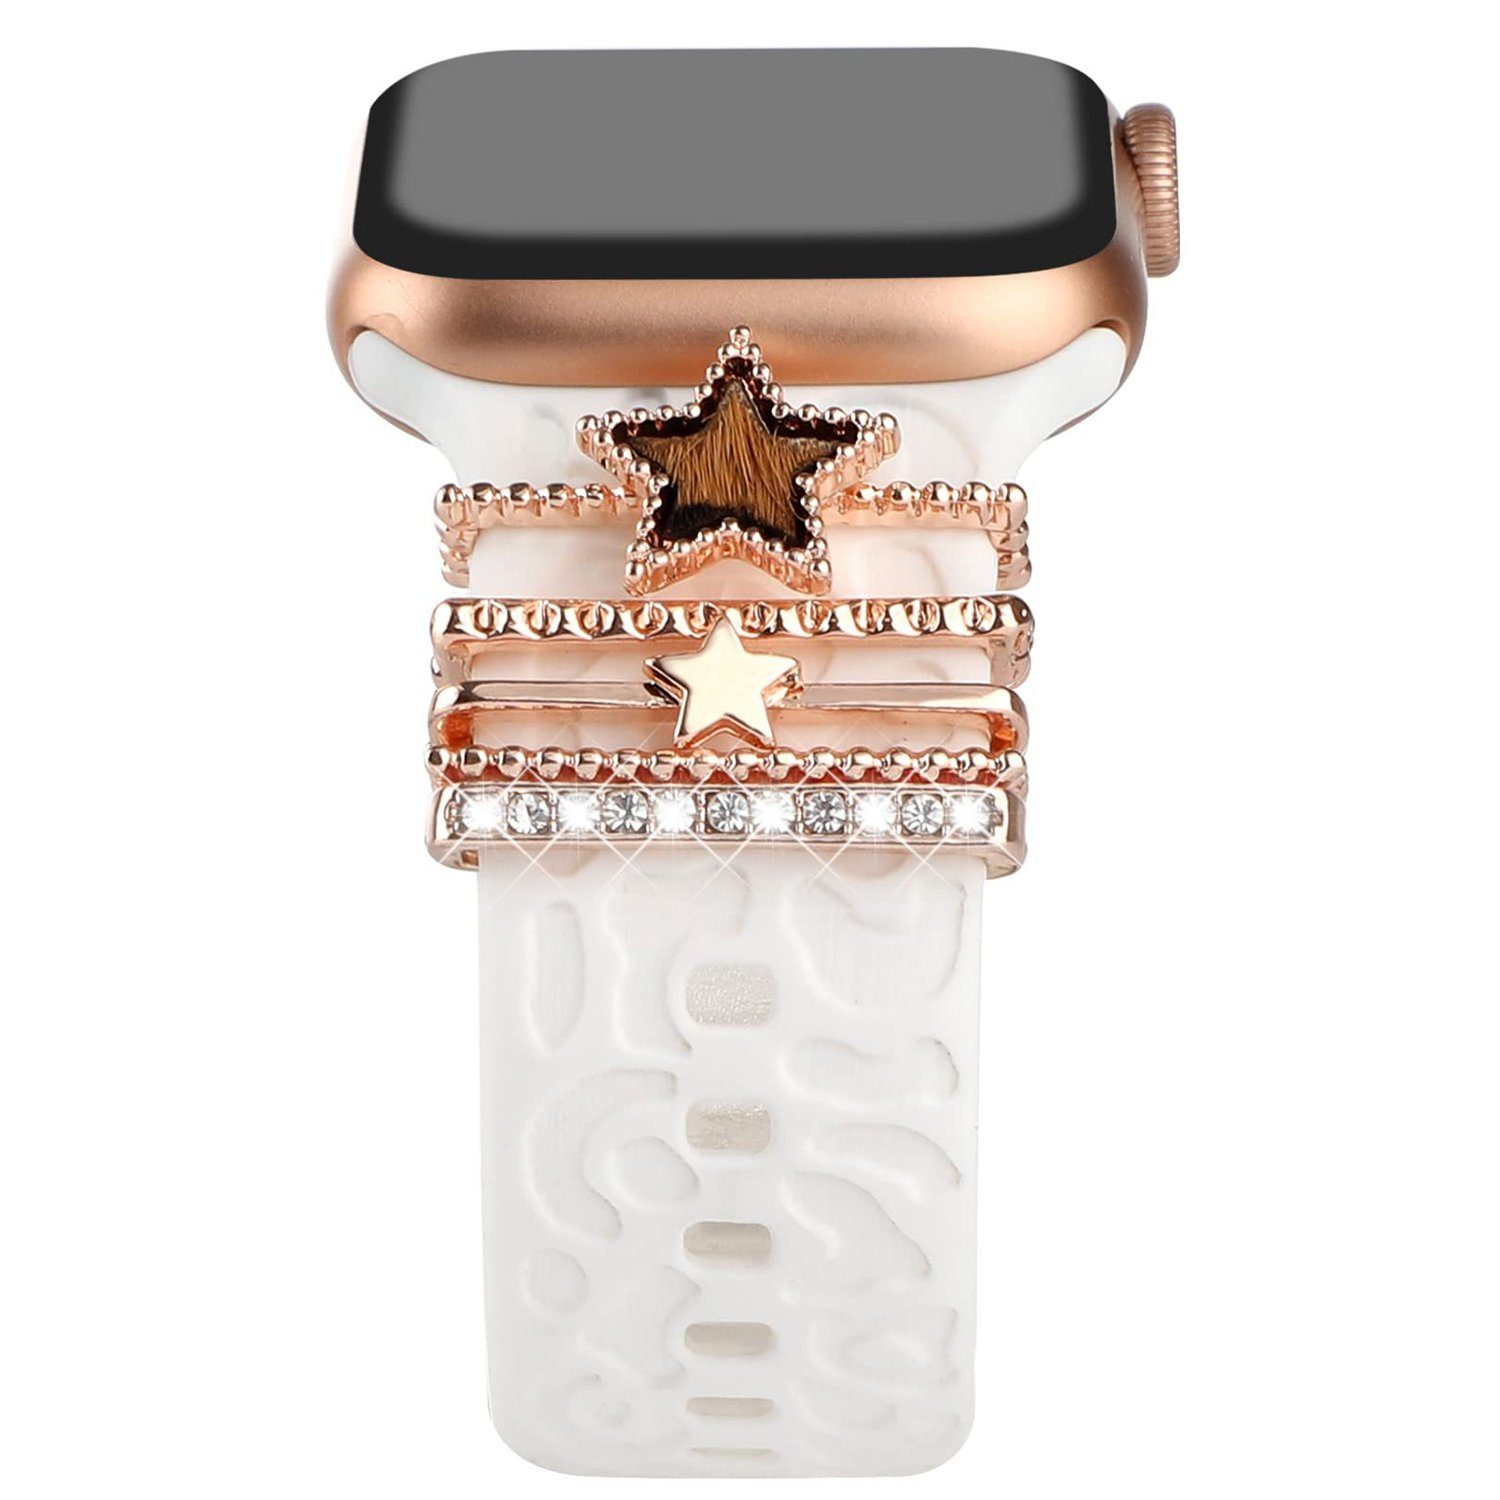 MAGICSHE Uhrenarmband Armband dekorativer Ring Für Apple Watch, Armband Zubehör